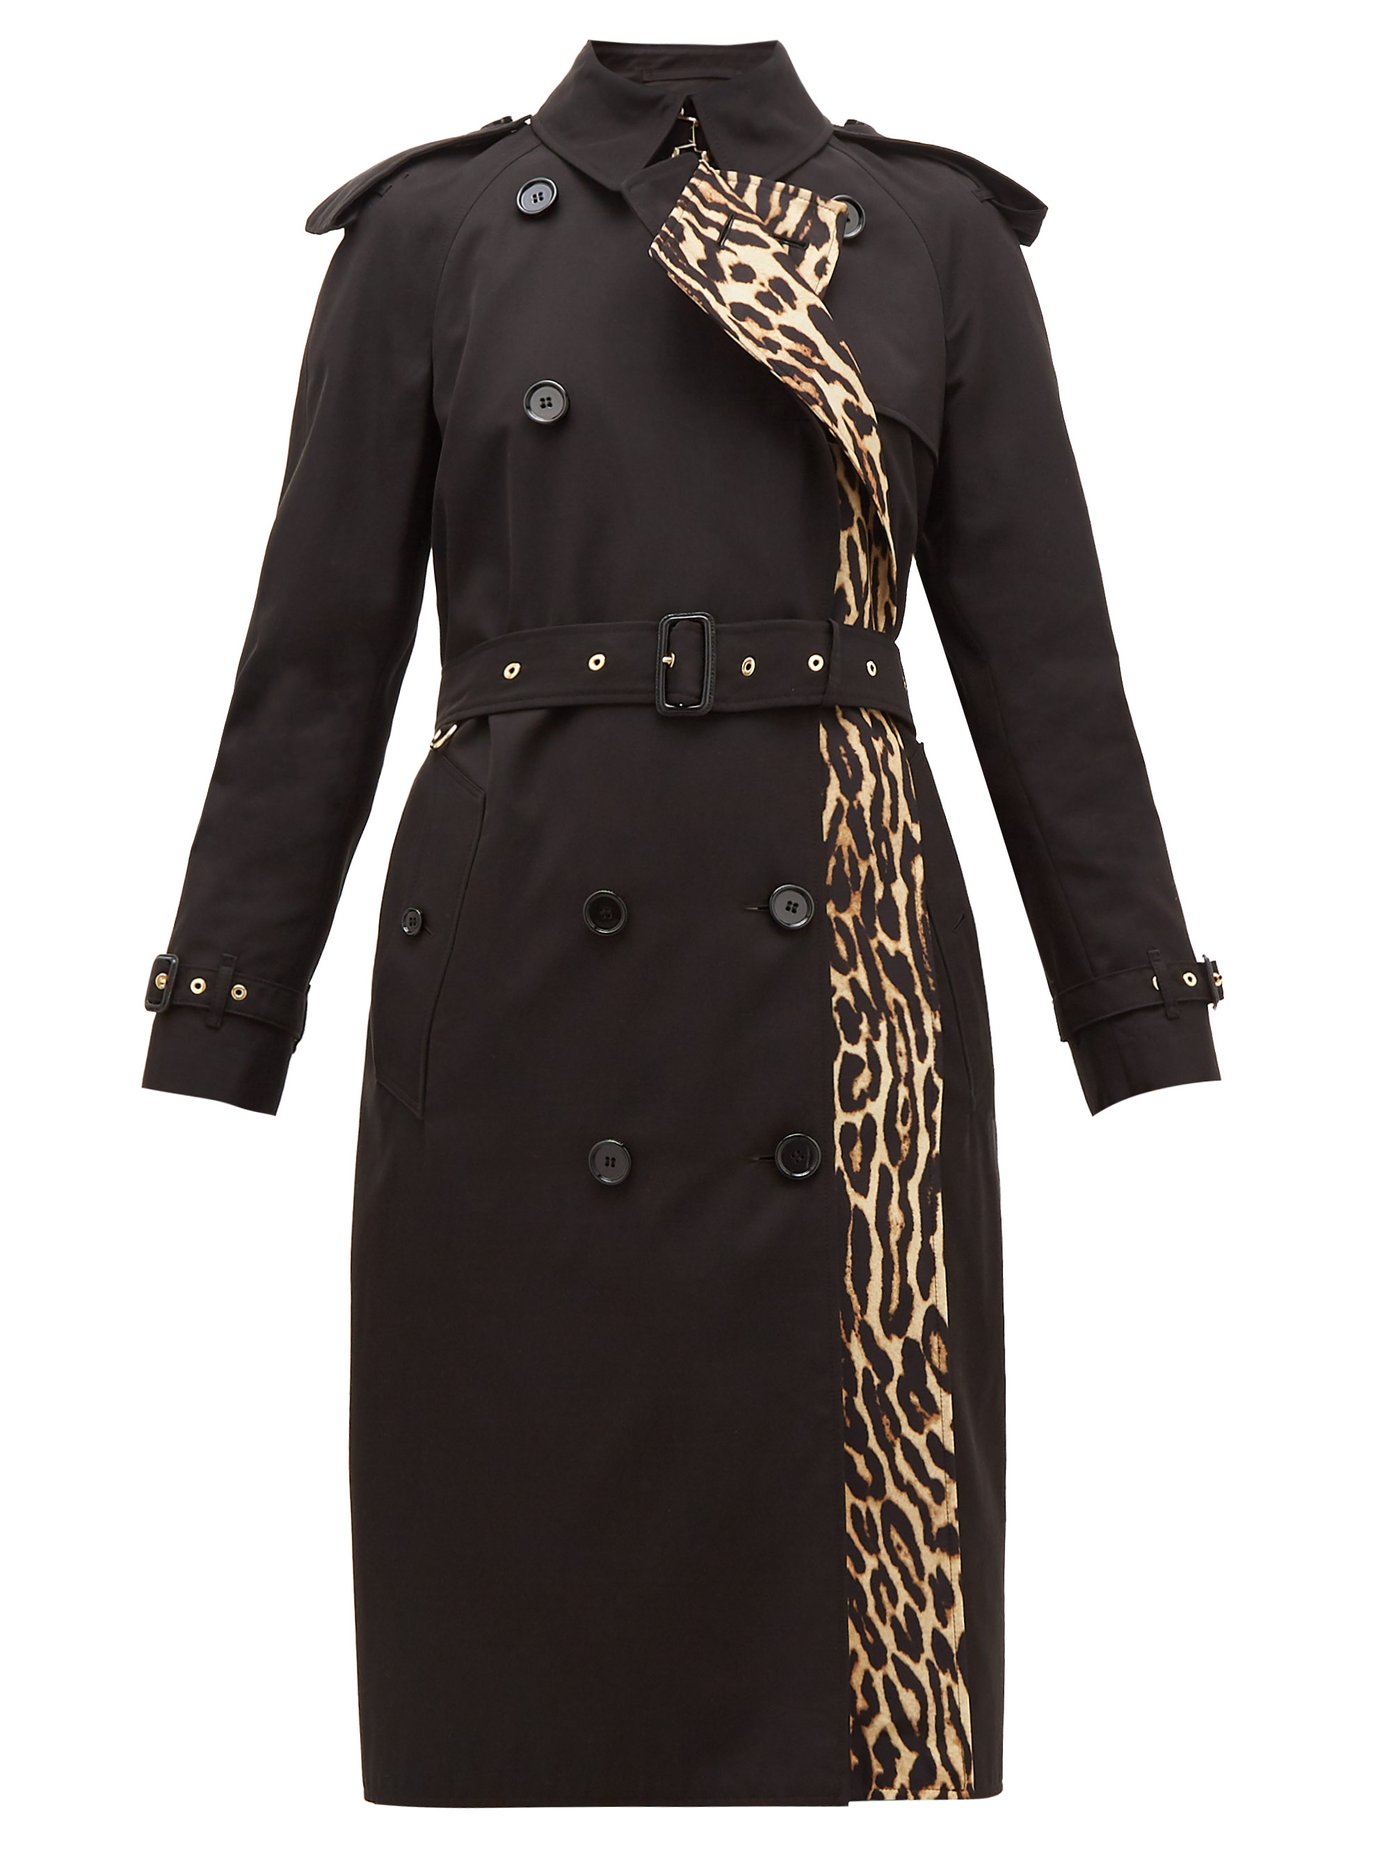 burberry leopard coat